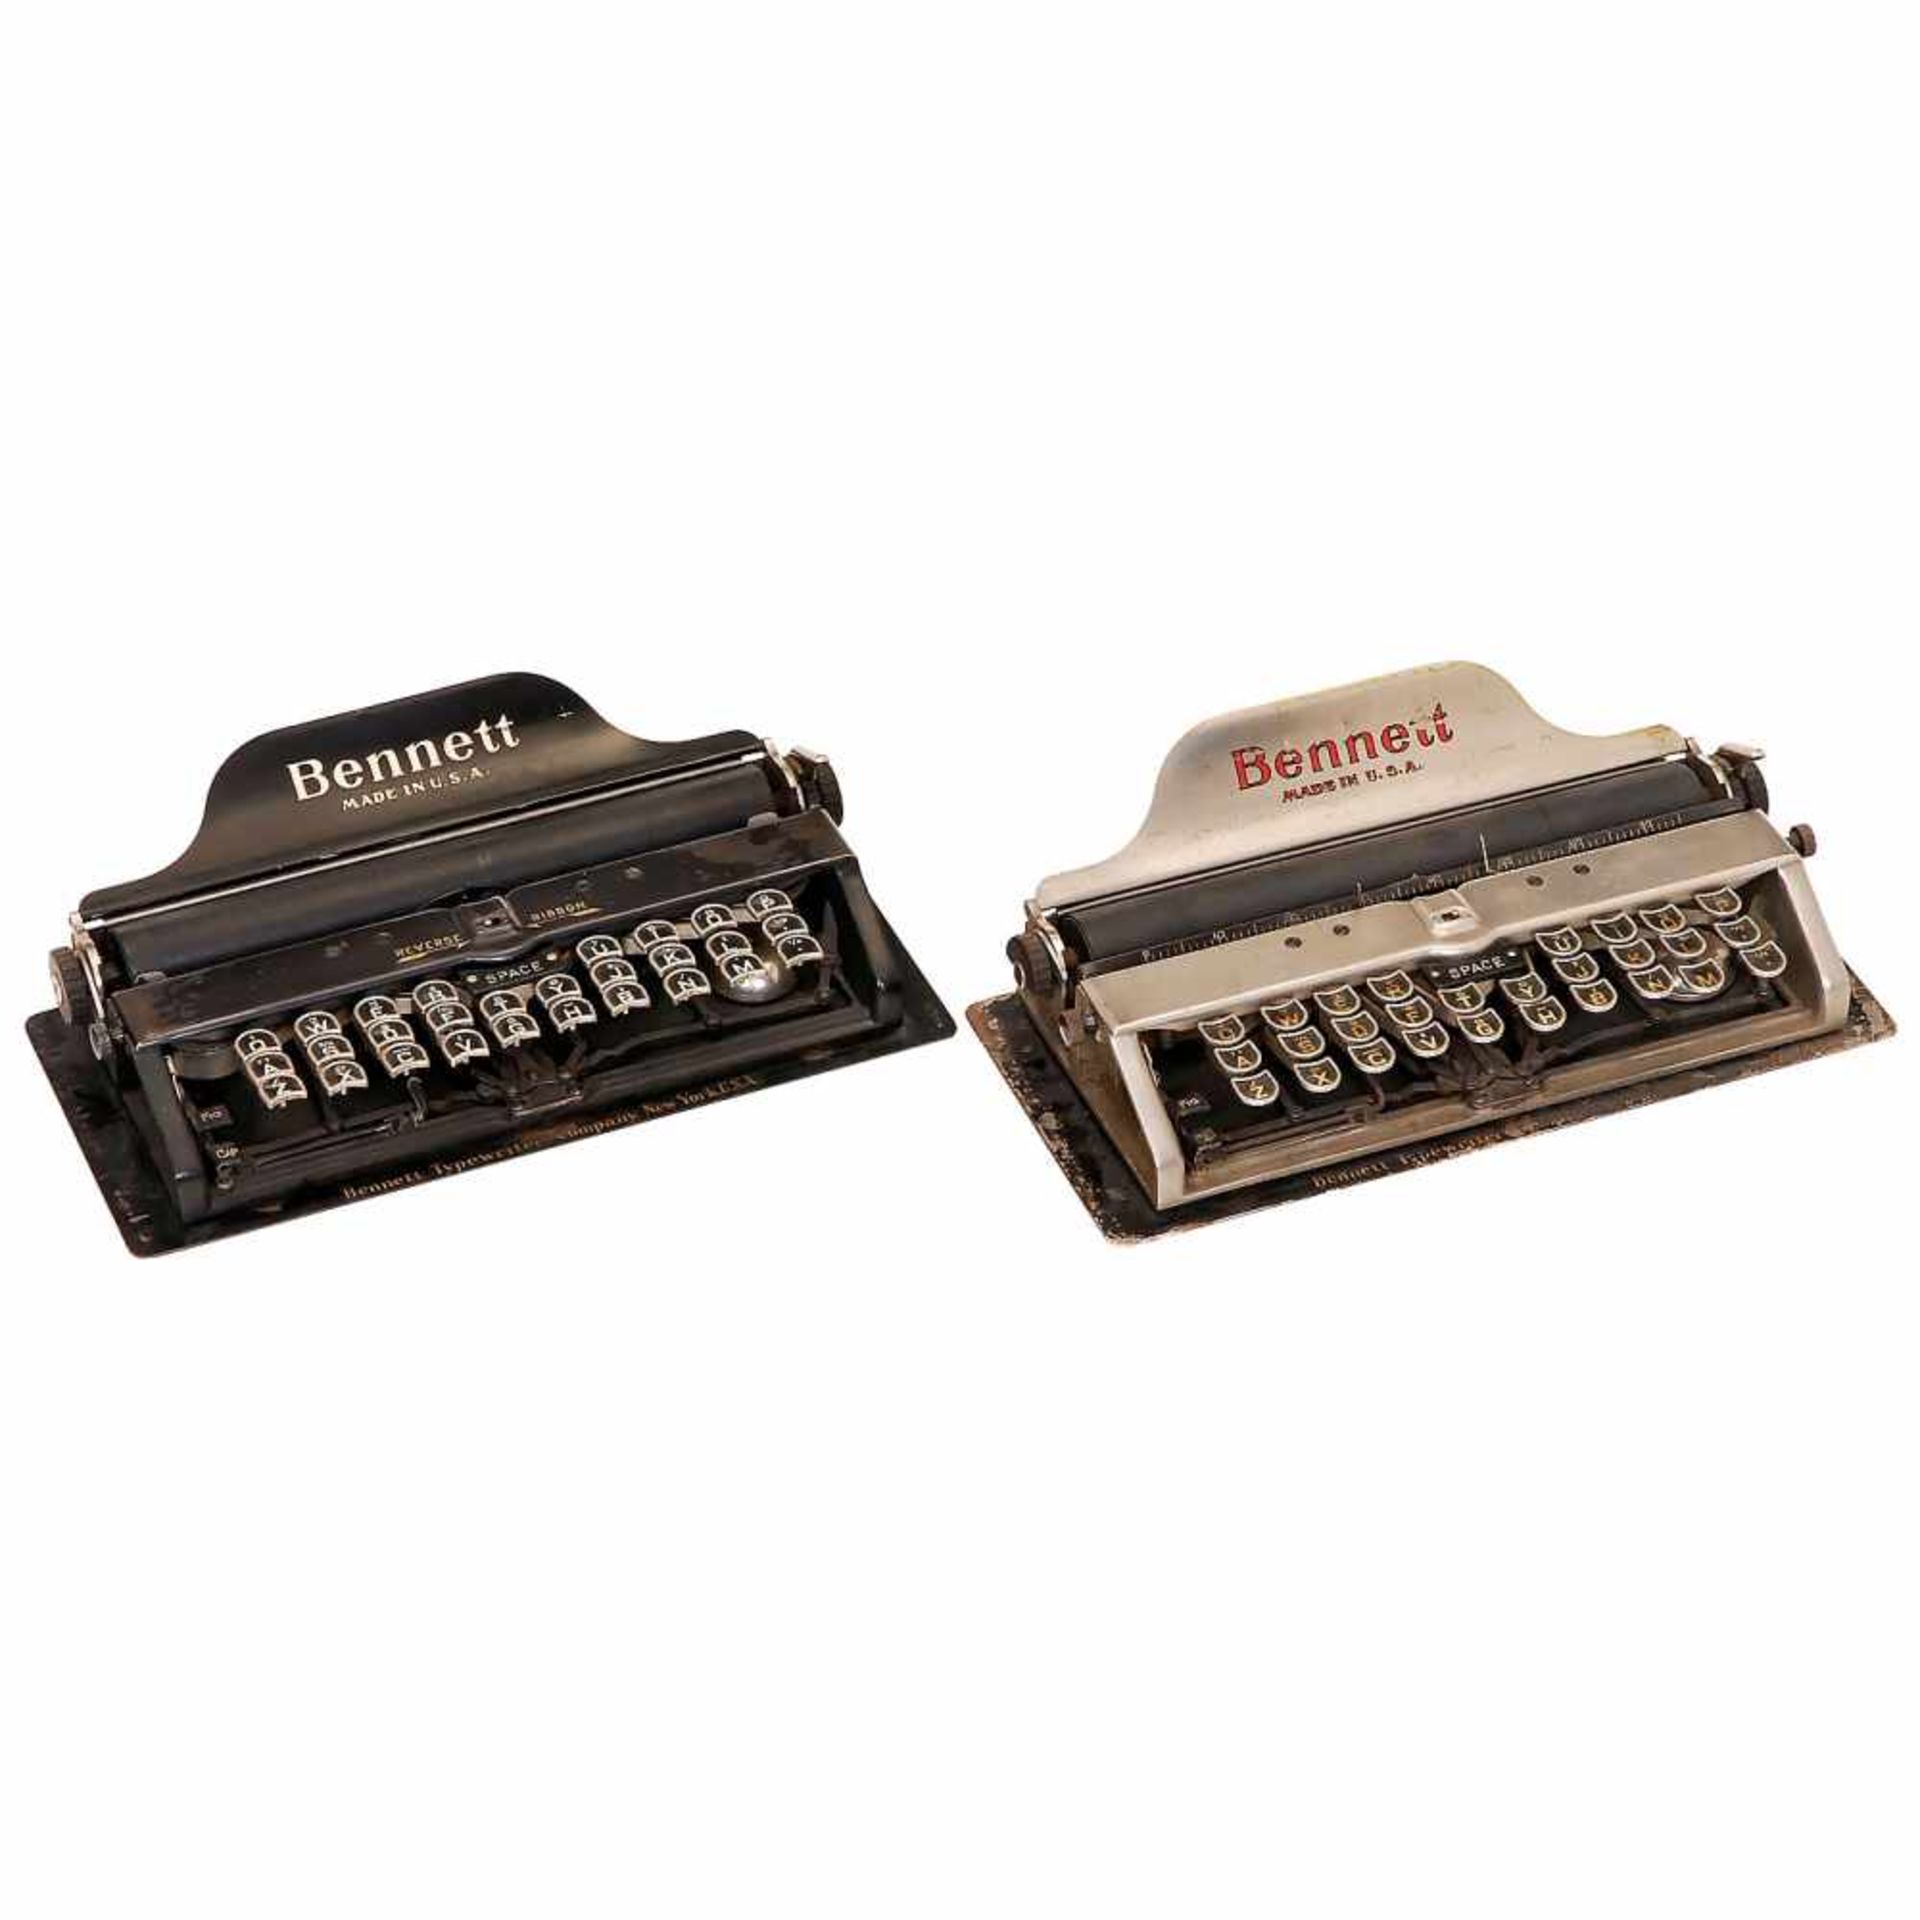 2 American Bennett Typewriters, c. 1910Bennett Typewriter Company, New York. Typewheel machines,